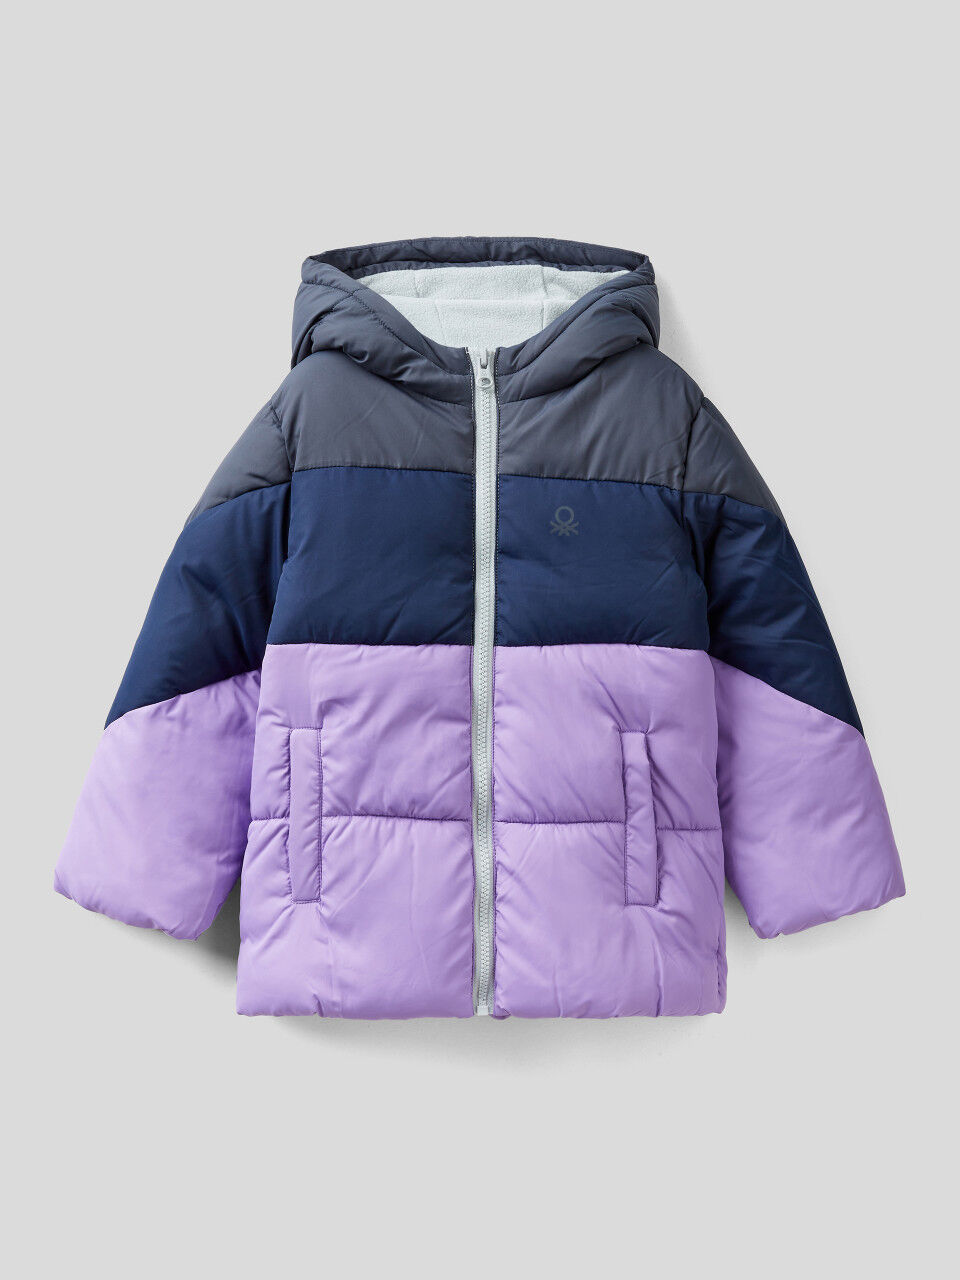 Color block puffer jacket